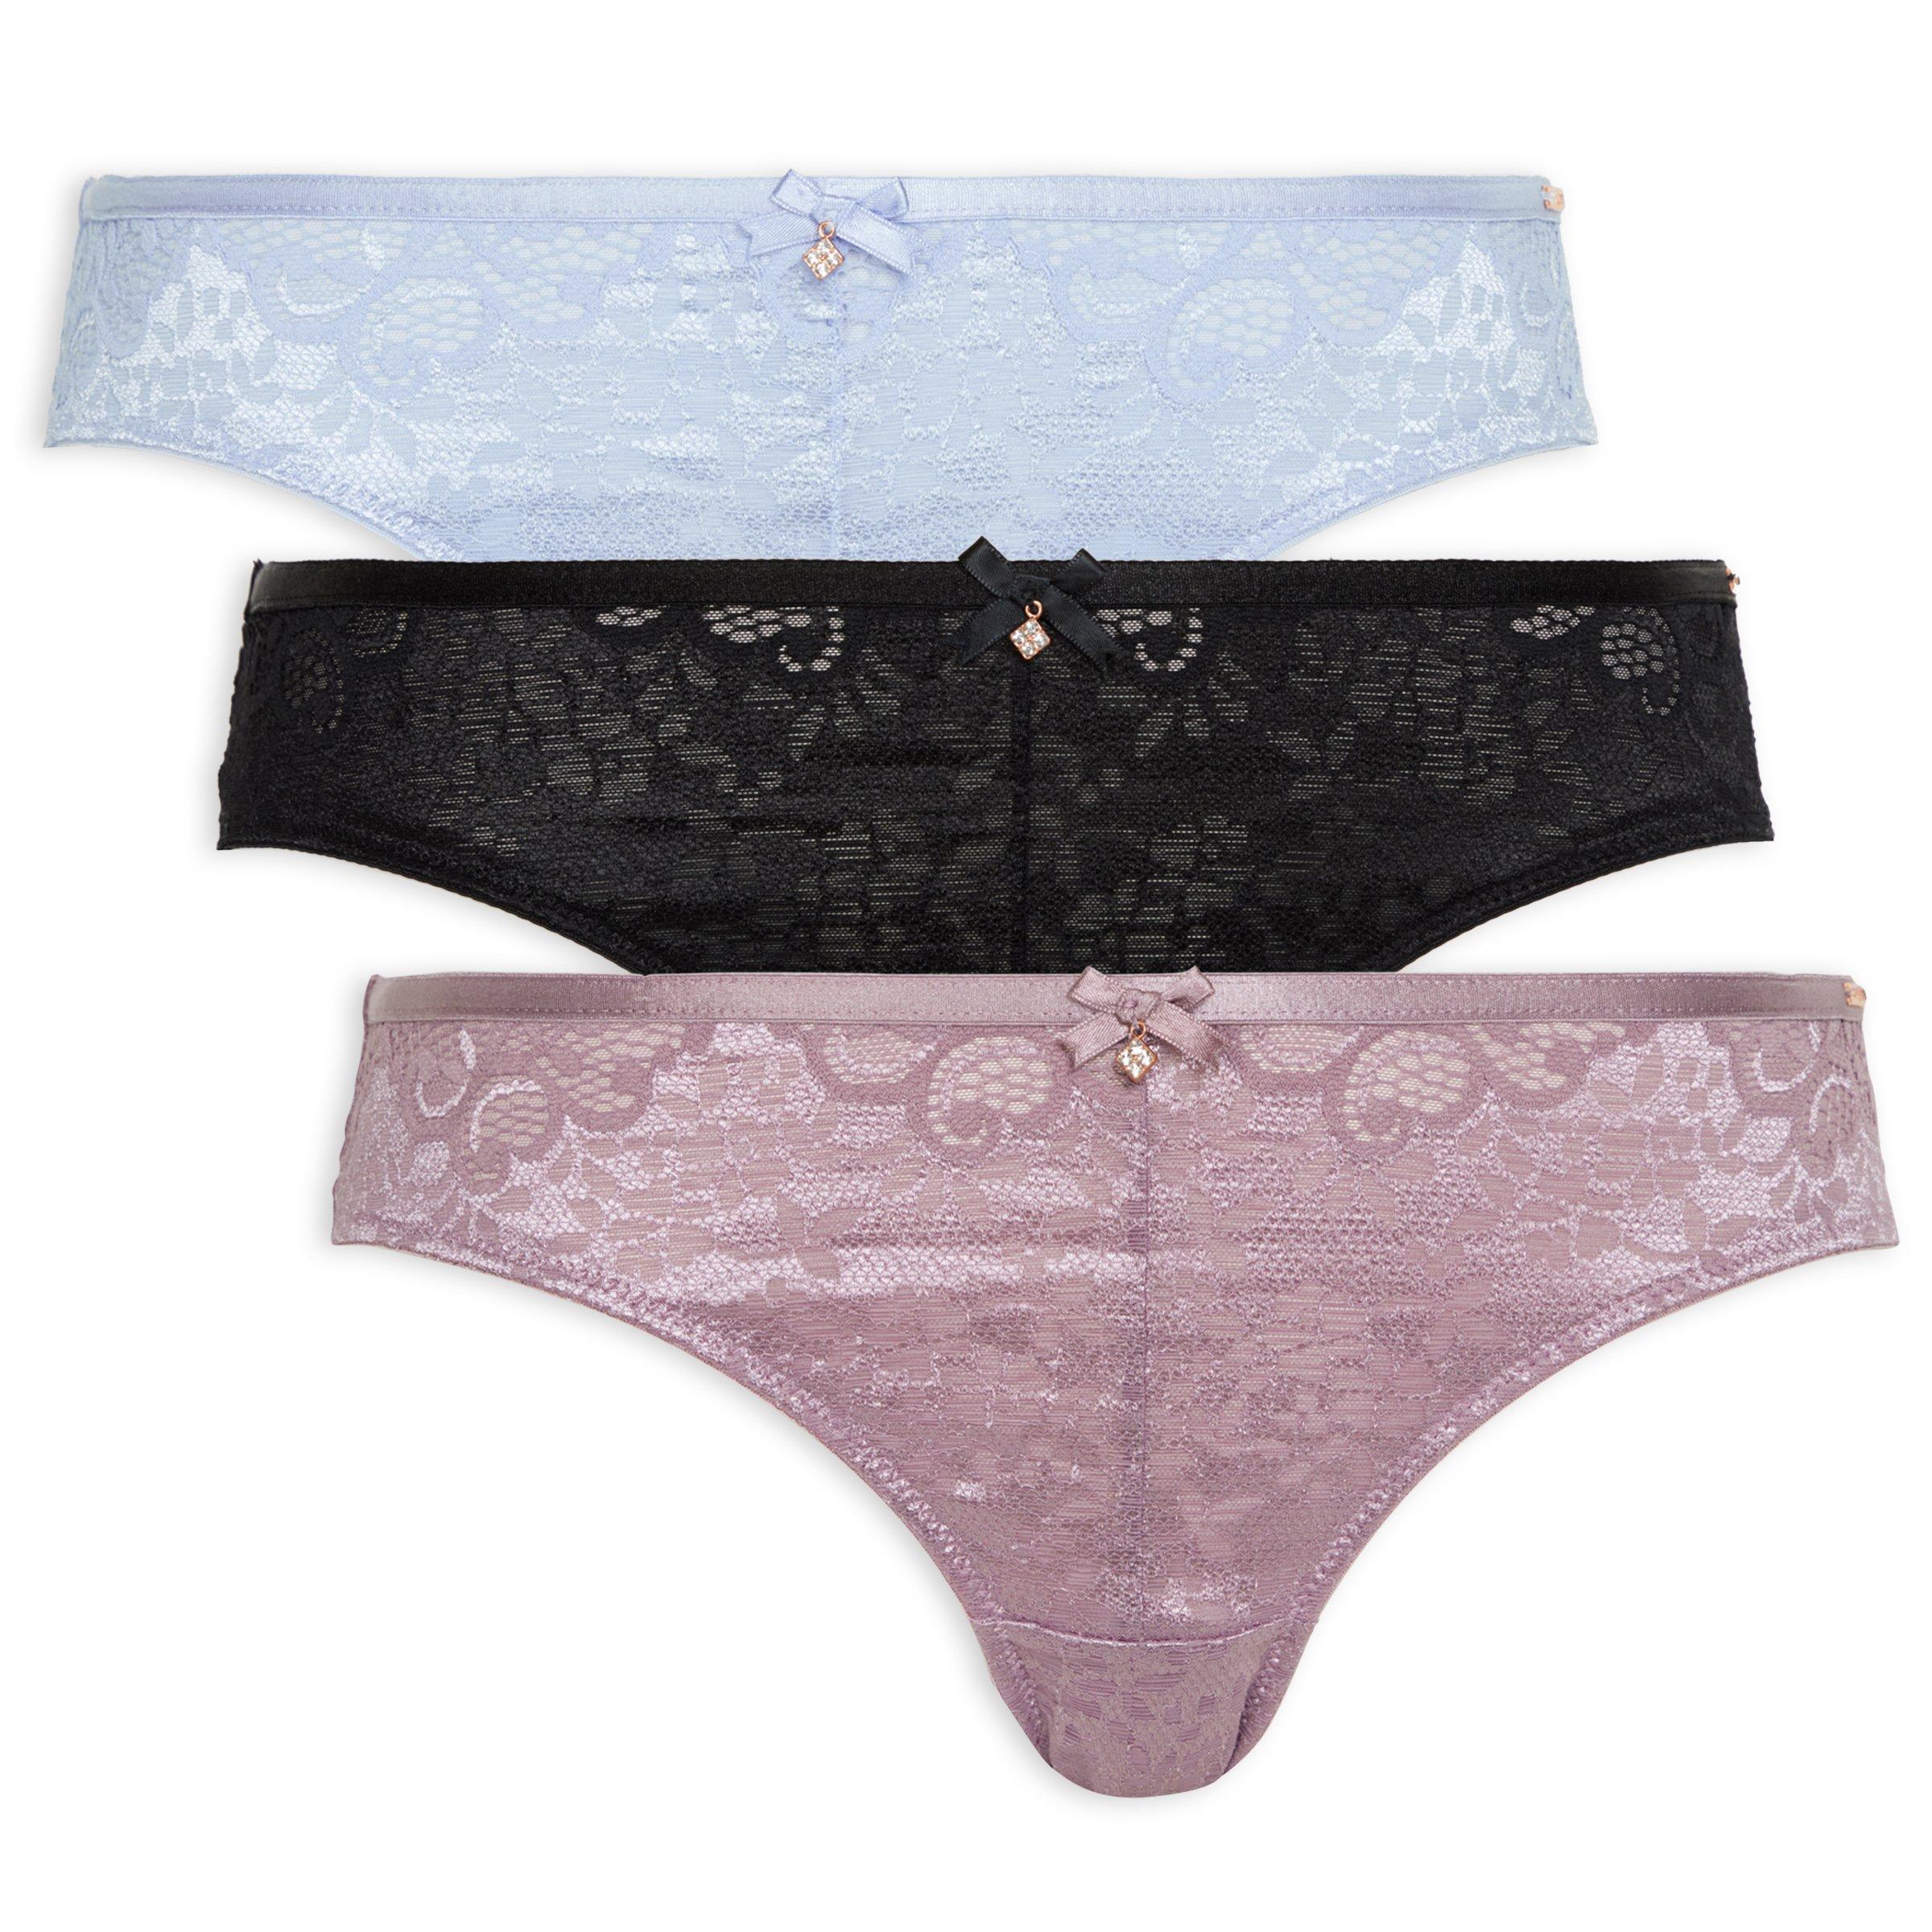 Women's translucent lace brazilian panties with decorative straps